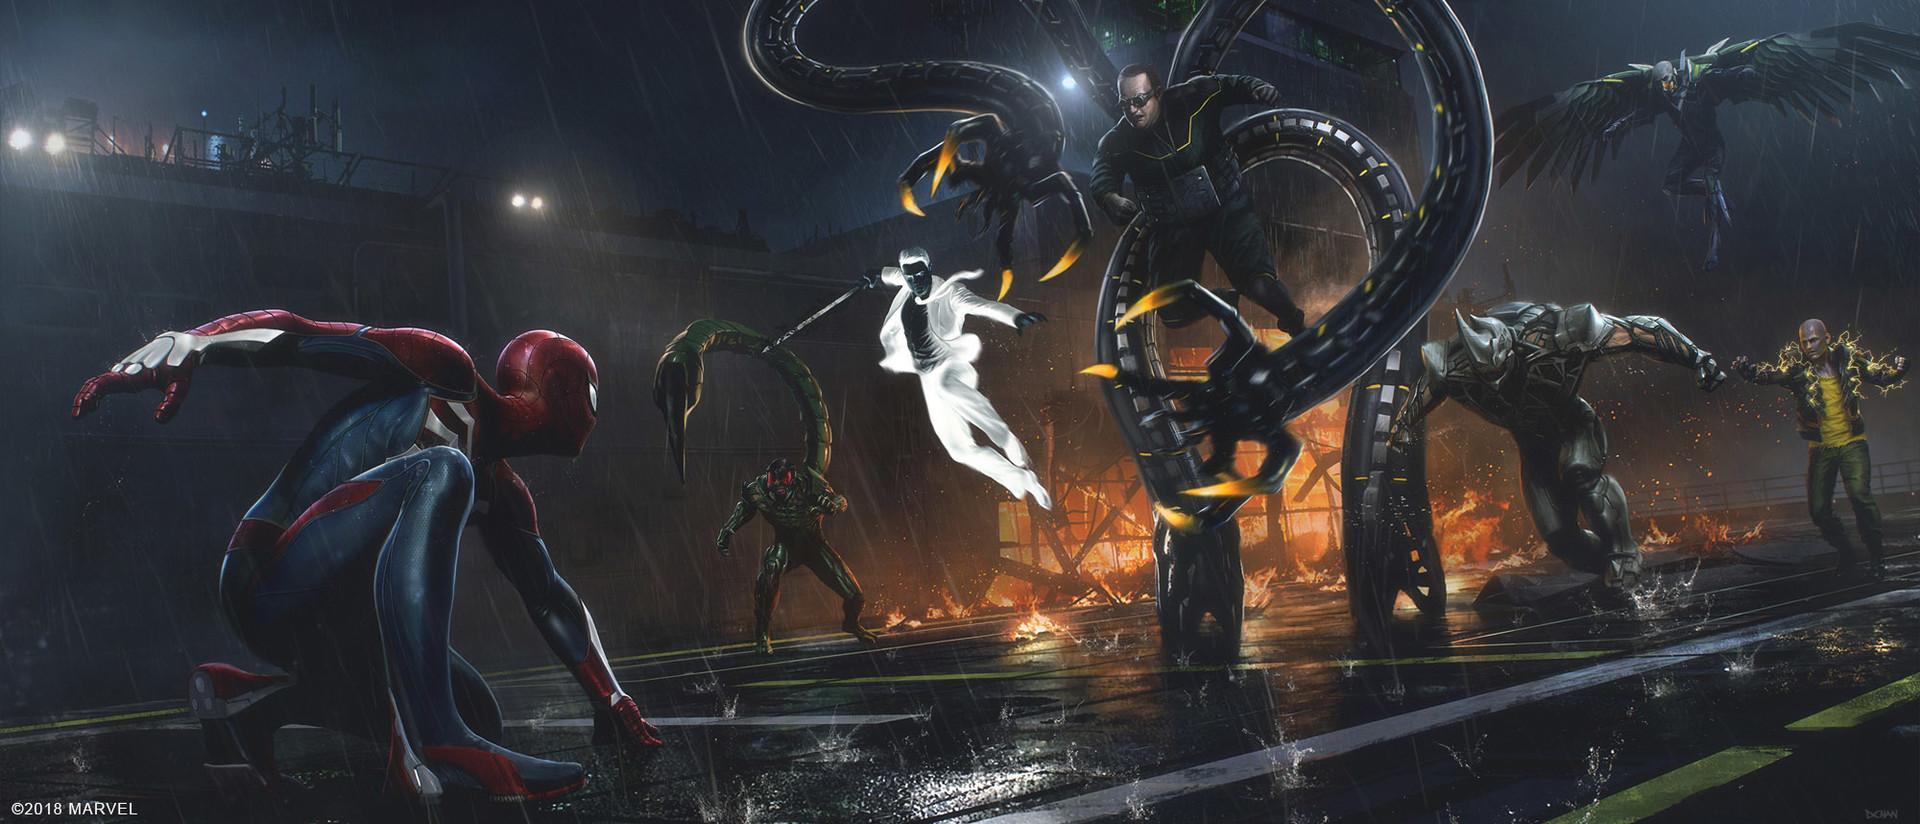 Spider-Man Remastered PC - Doctor Octopus Final Boss & Ending (4K